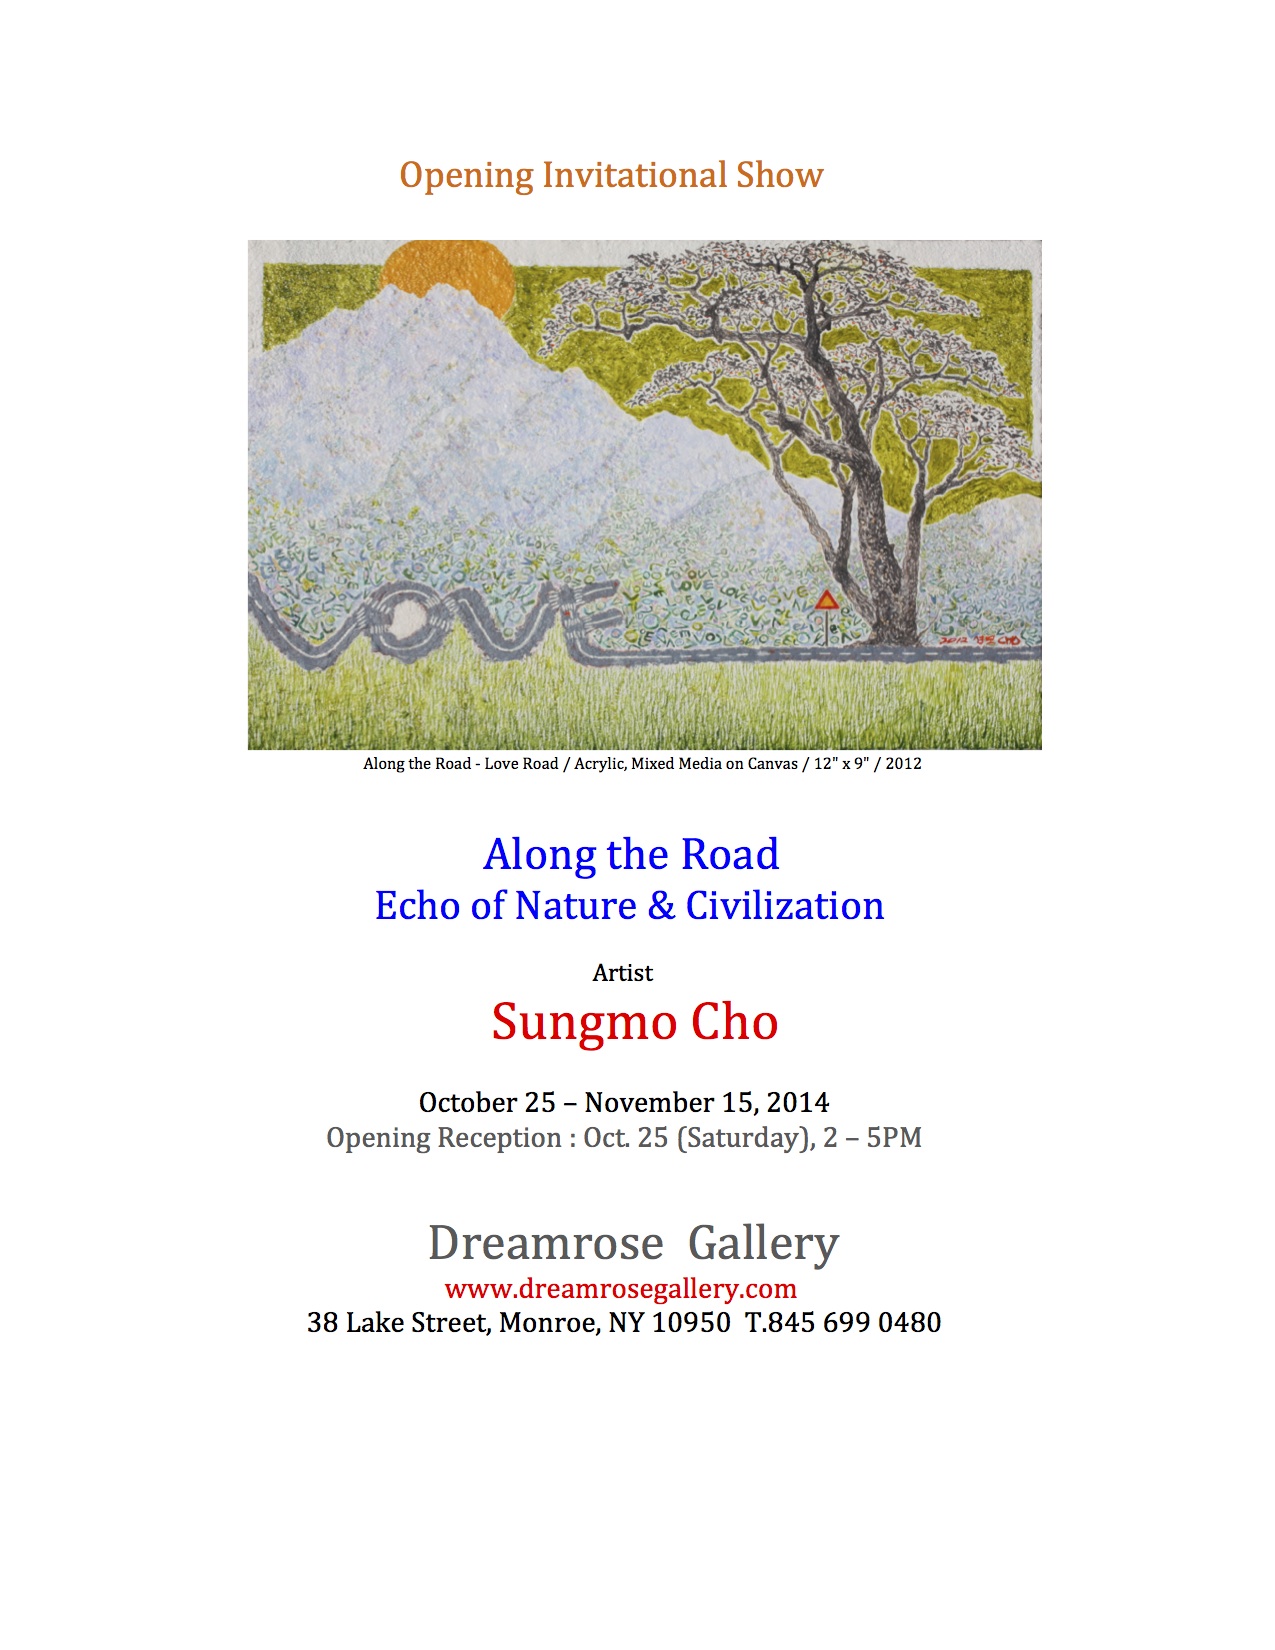 Dreamrose Gallery Invitational Exhibition